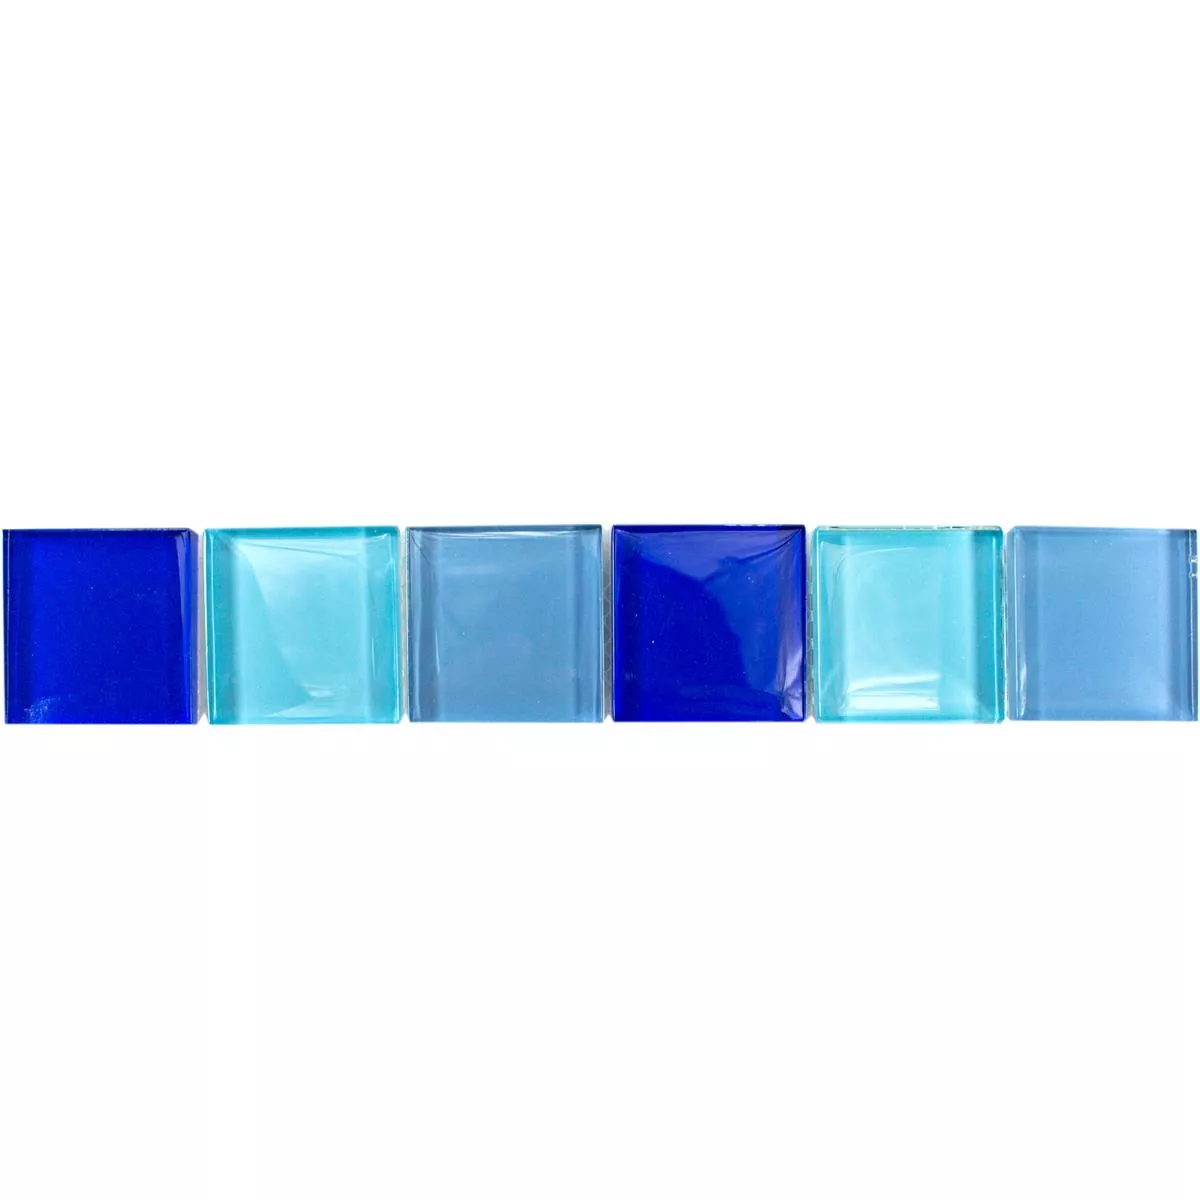 Glas Fliser Bordure Exira Blå Turkis